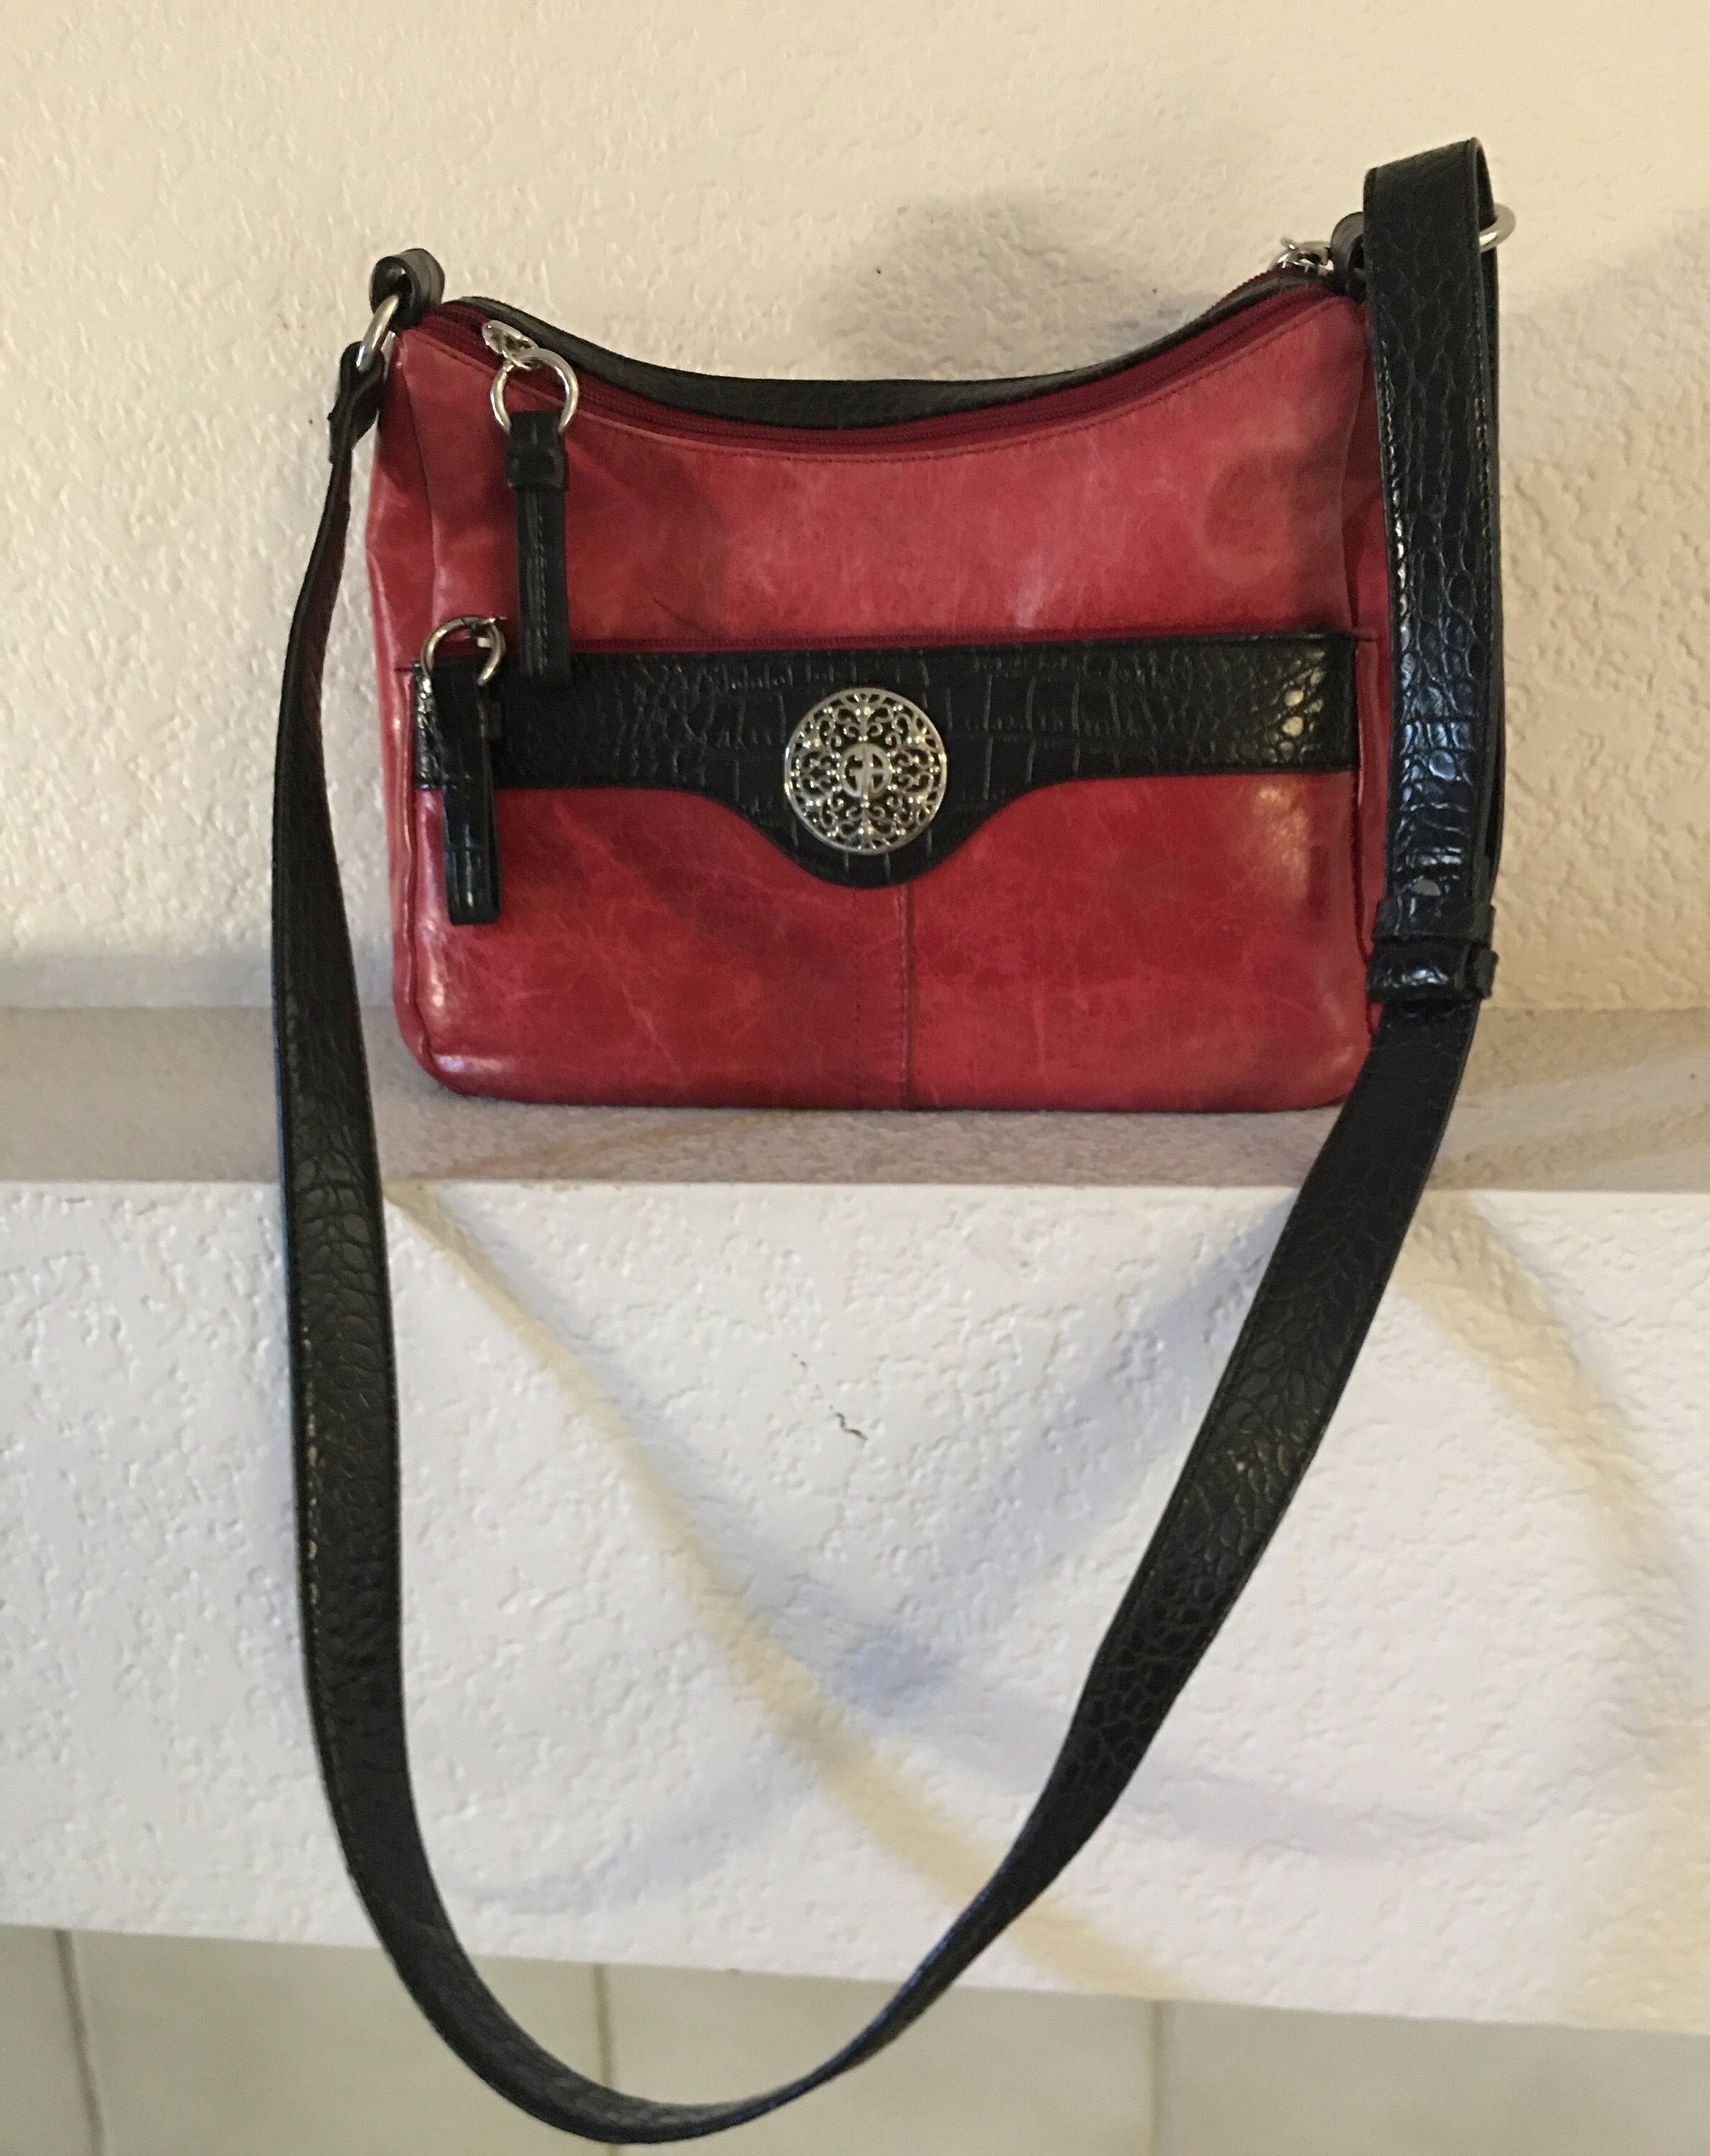 Giani Bernini, Bags, Red Leather Giani Bernini Shoulder Bag Purse